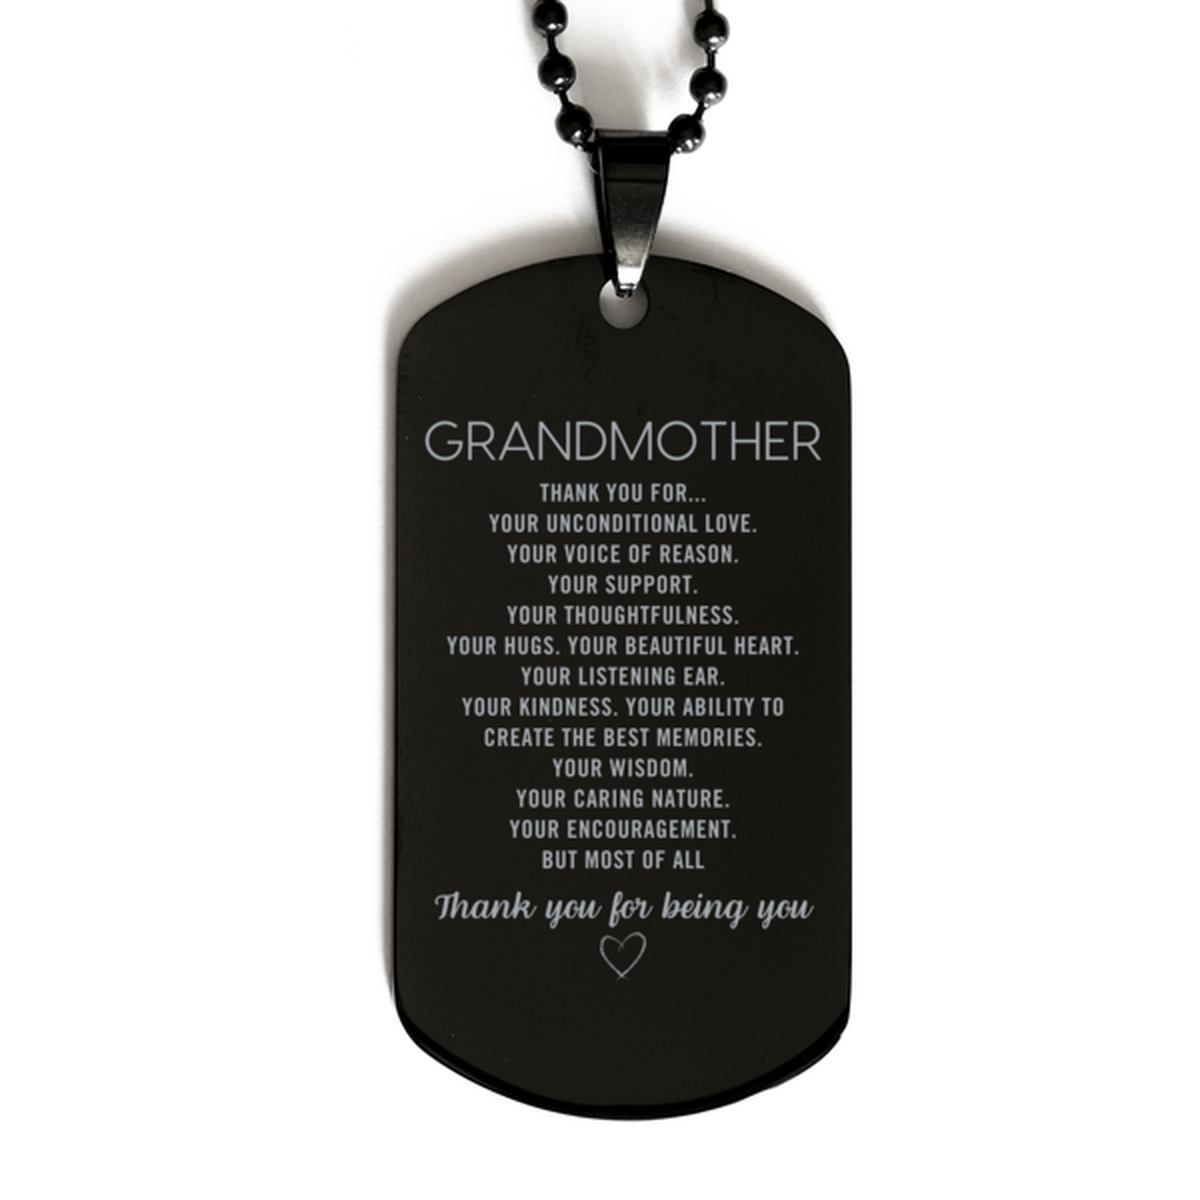 Grandmother Black Dog Tag Custom, Engraved Gifts For Grandmother Christmas Graduation Birthday Gifts for Men Women Grandmother Thank you for Your unconditional love